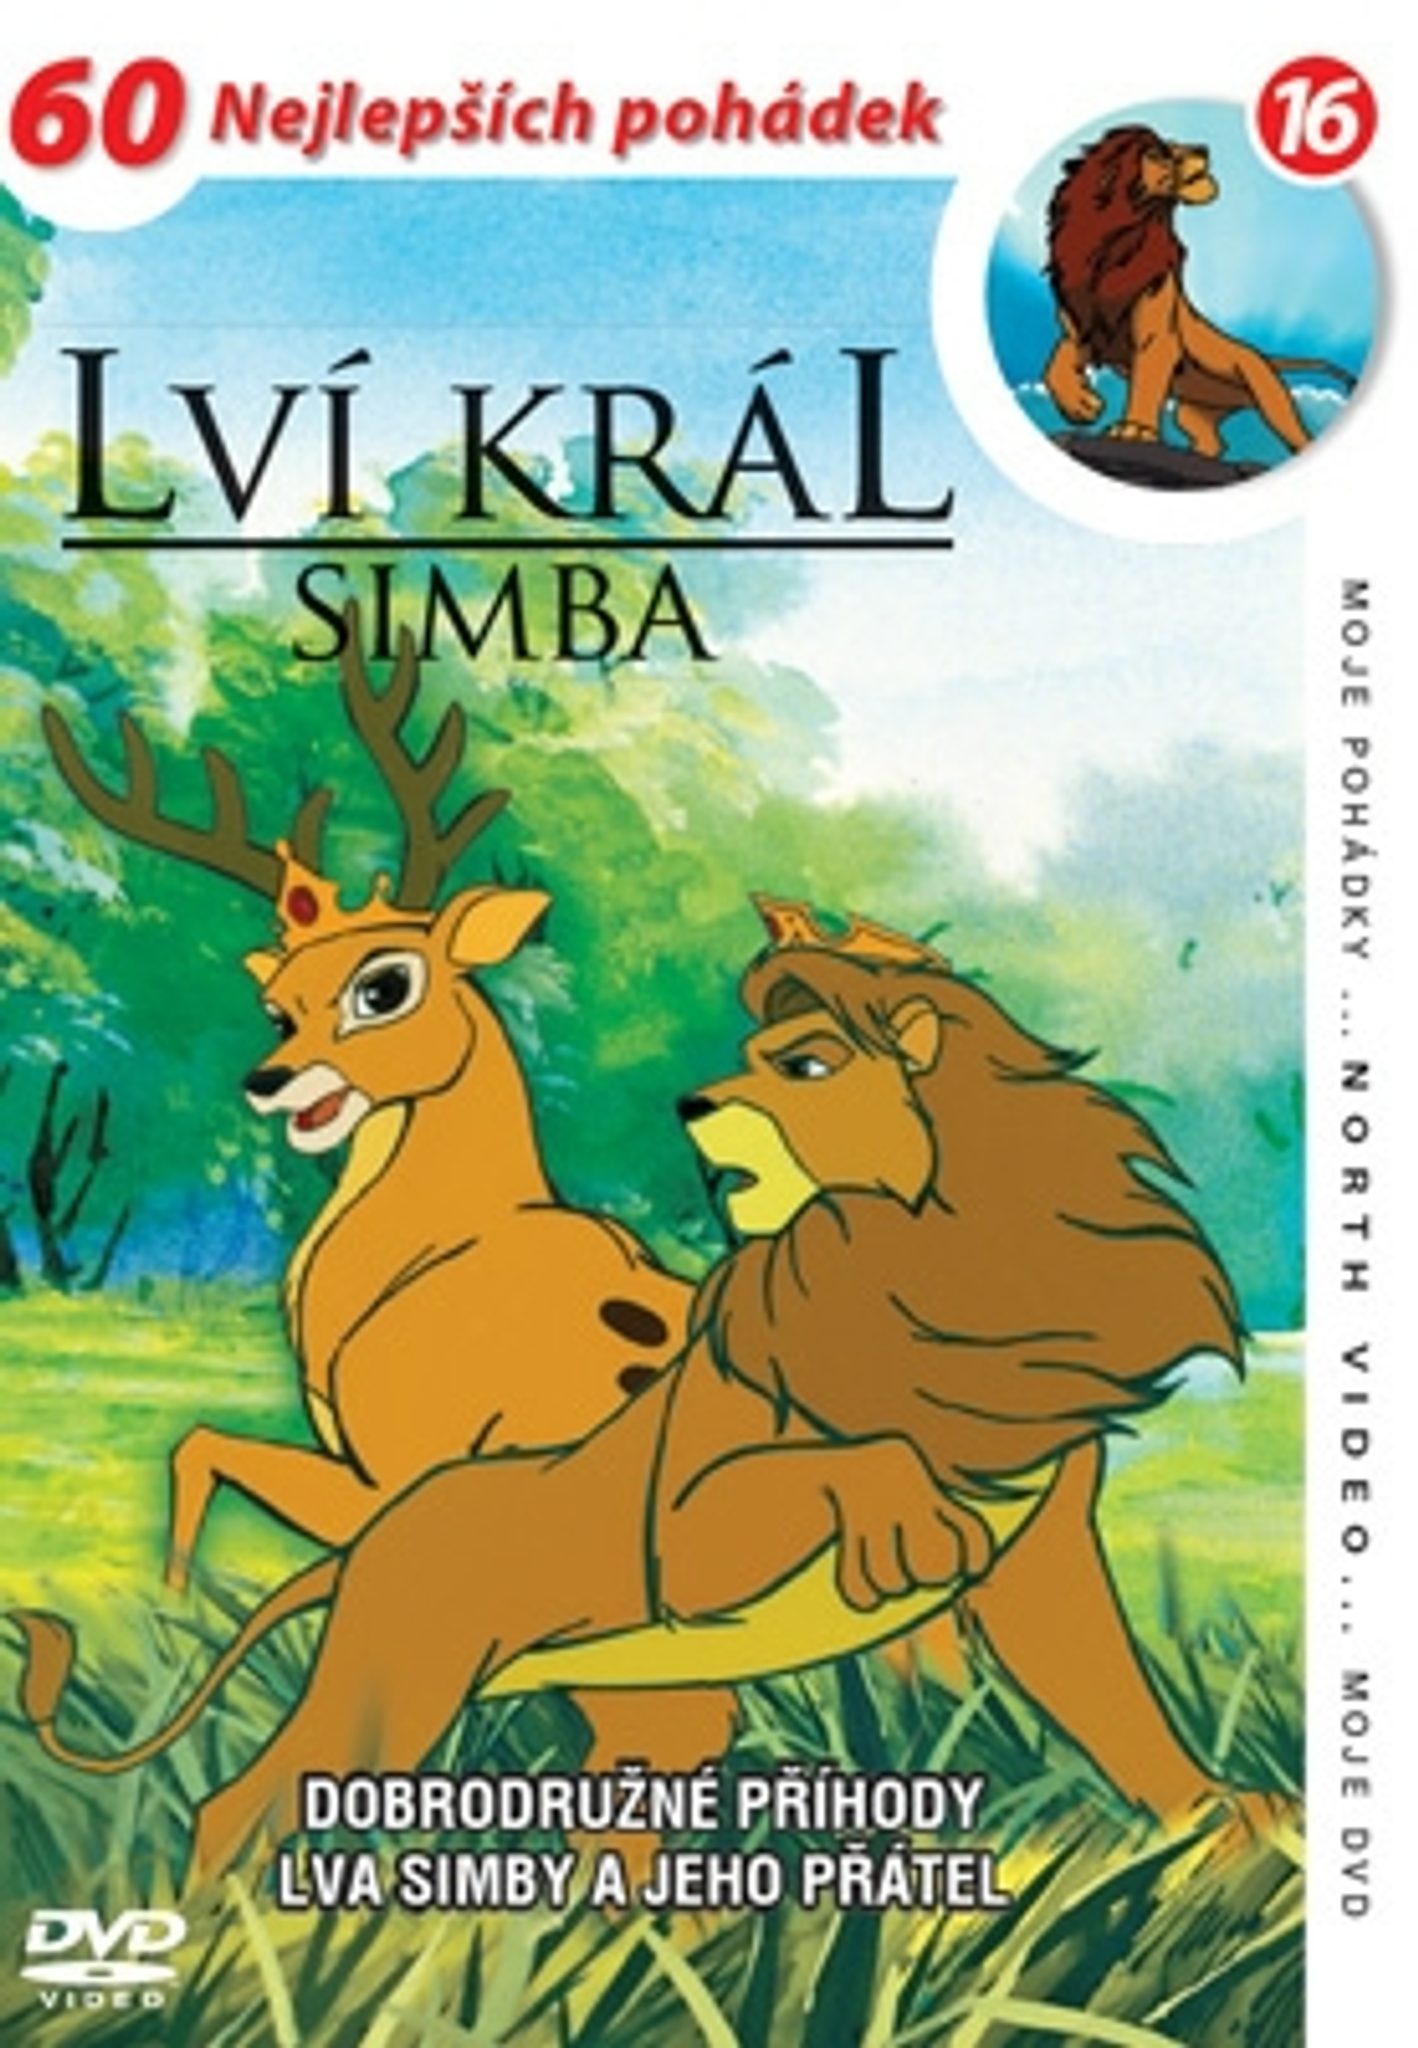 DVD Lv krl - Simba 16